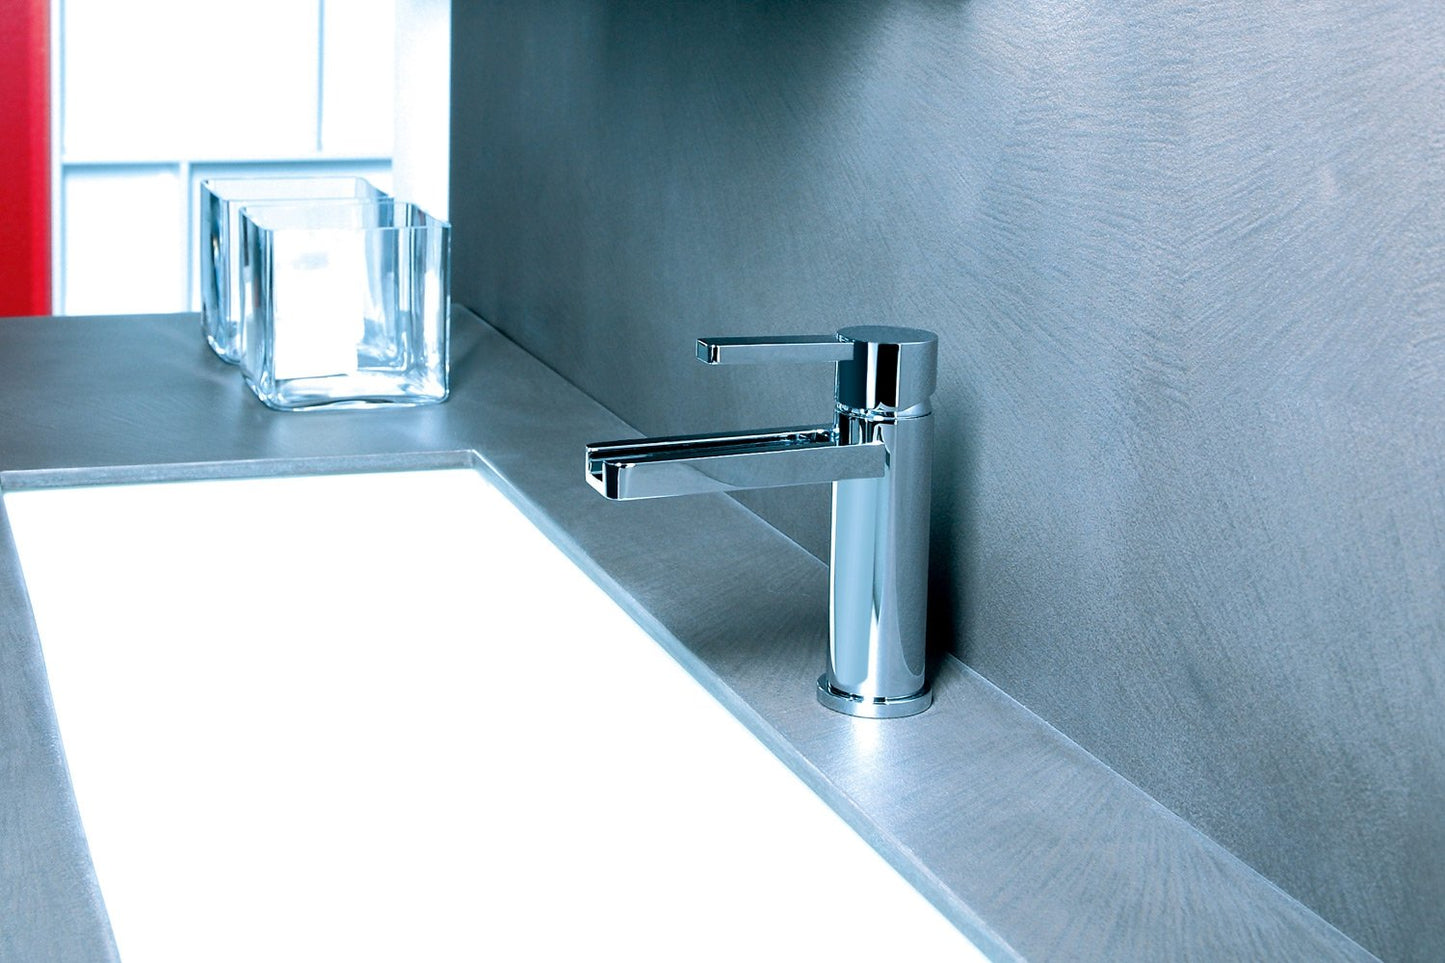 Robinet de lavabo monotrou Aquadesign Products (Aqua 500017) - Chrome